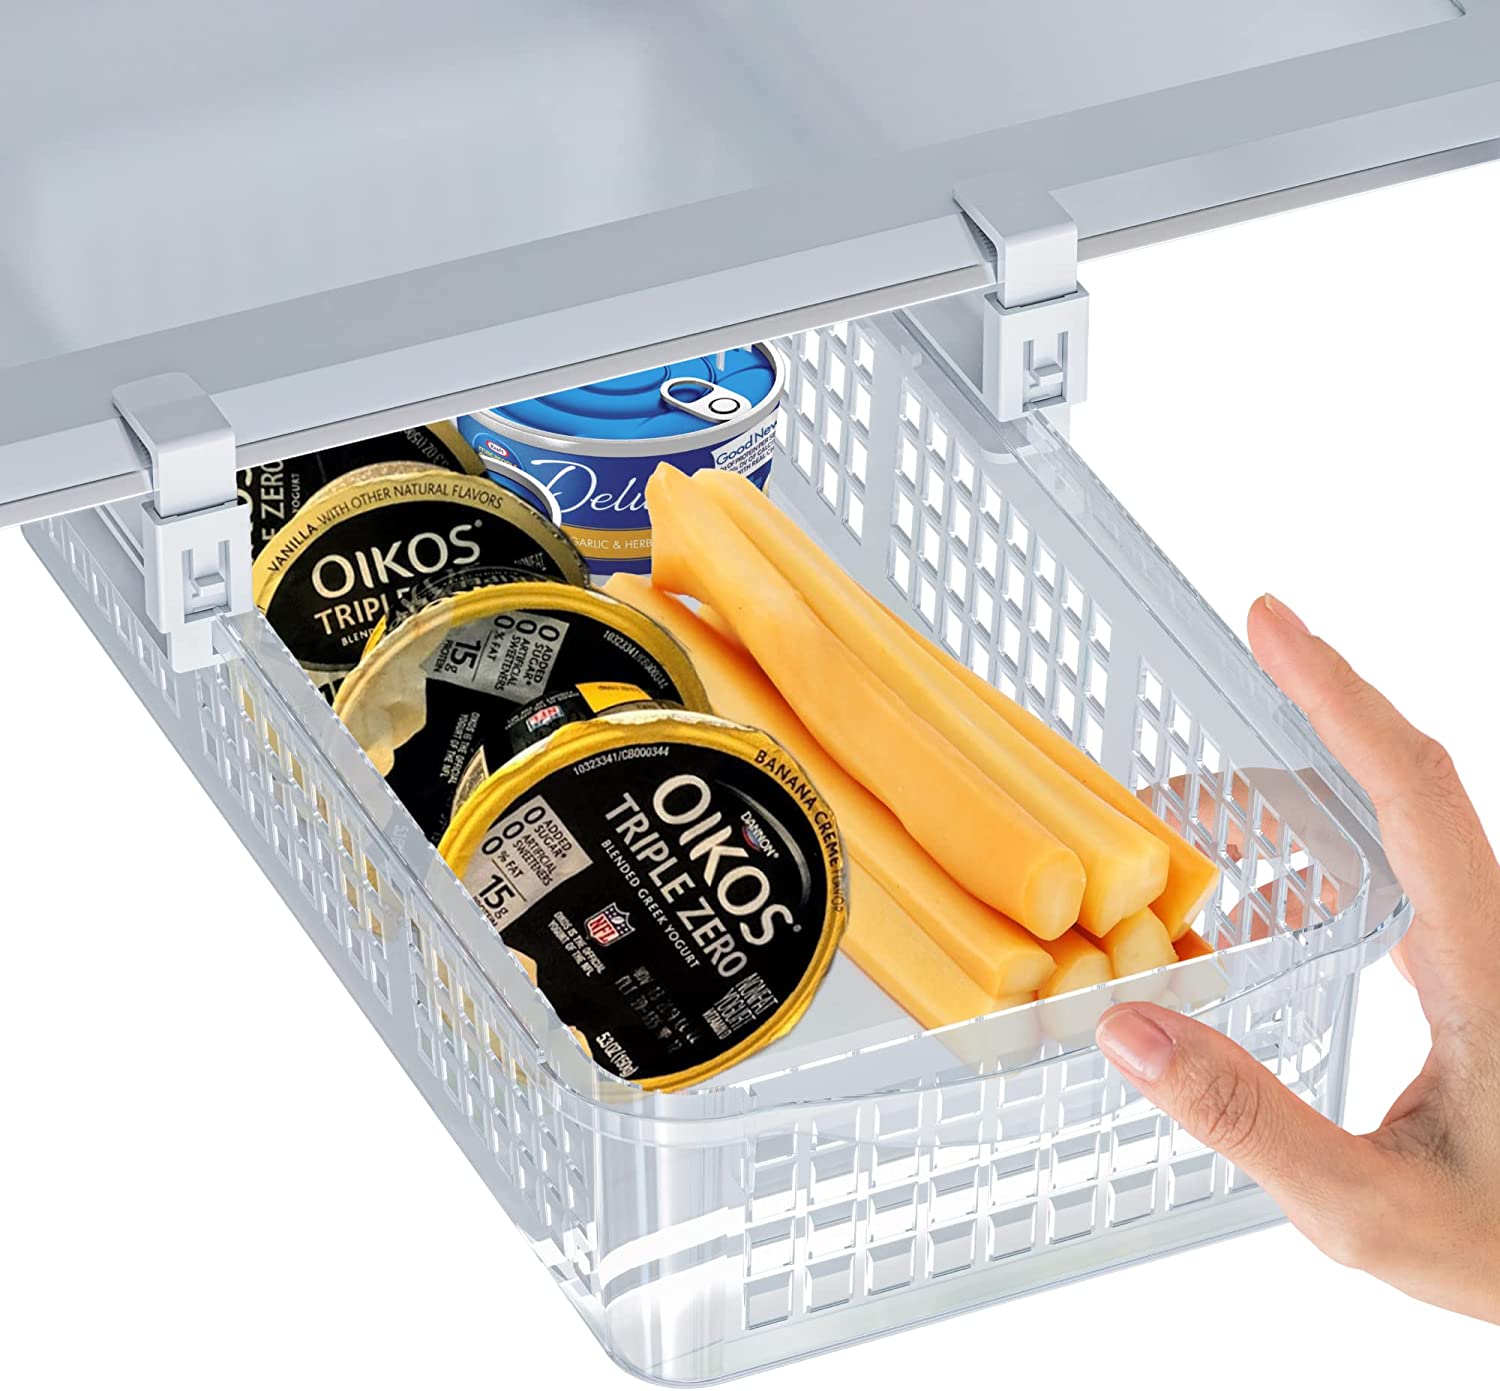 Skywin Refrigerator Egg Drawer - Snap-on Egg Holder for Refrigerator O –  Skywin Design